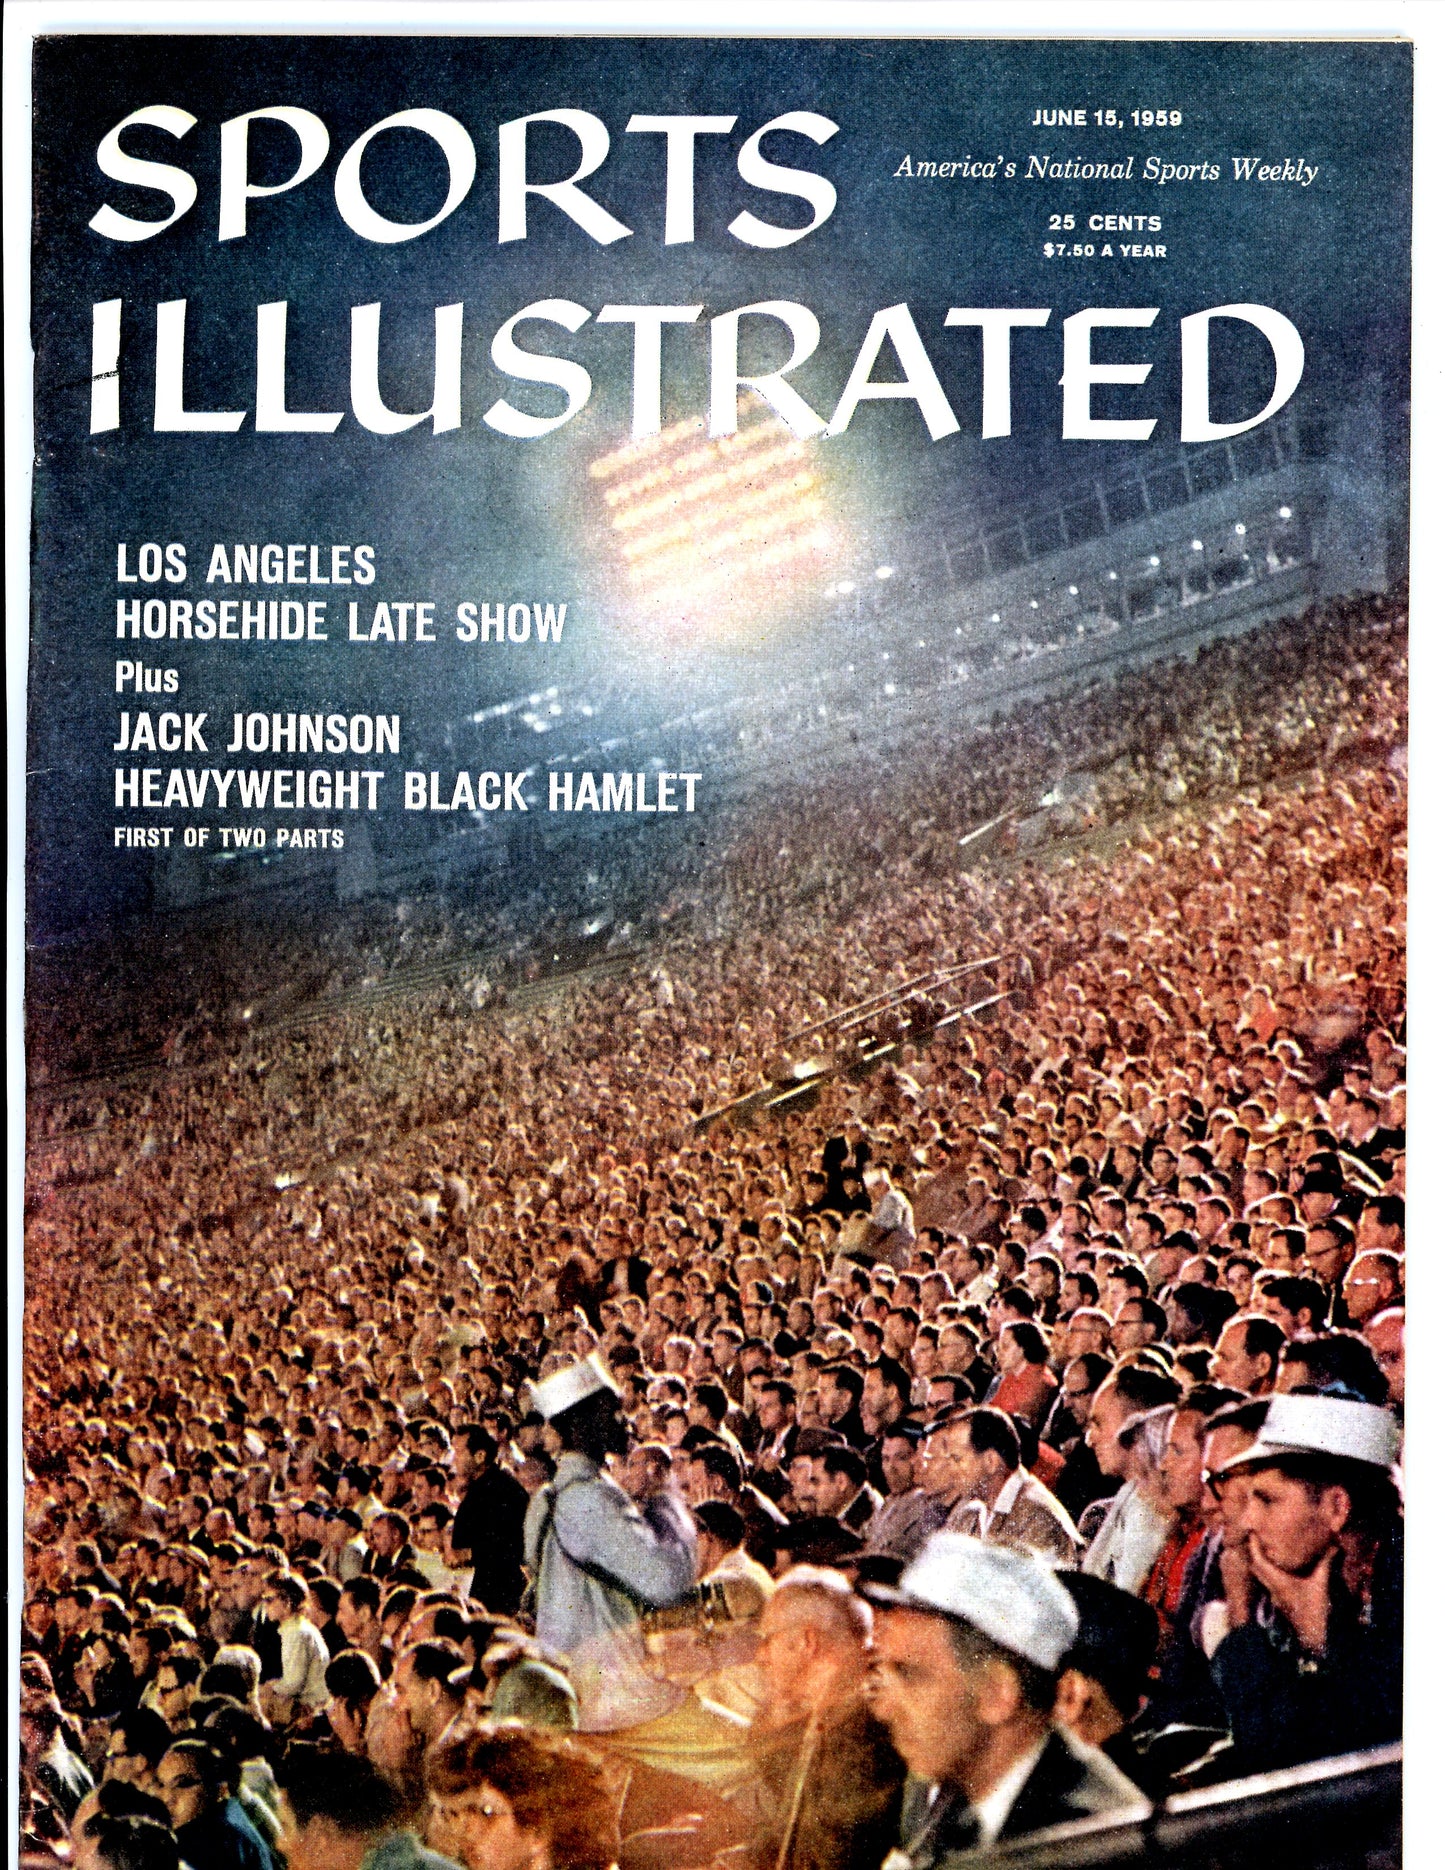 Sports Illustrated Vintage Magazine Rare Newsstand Edition (June 15, 1959) Los Angeles